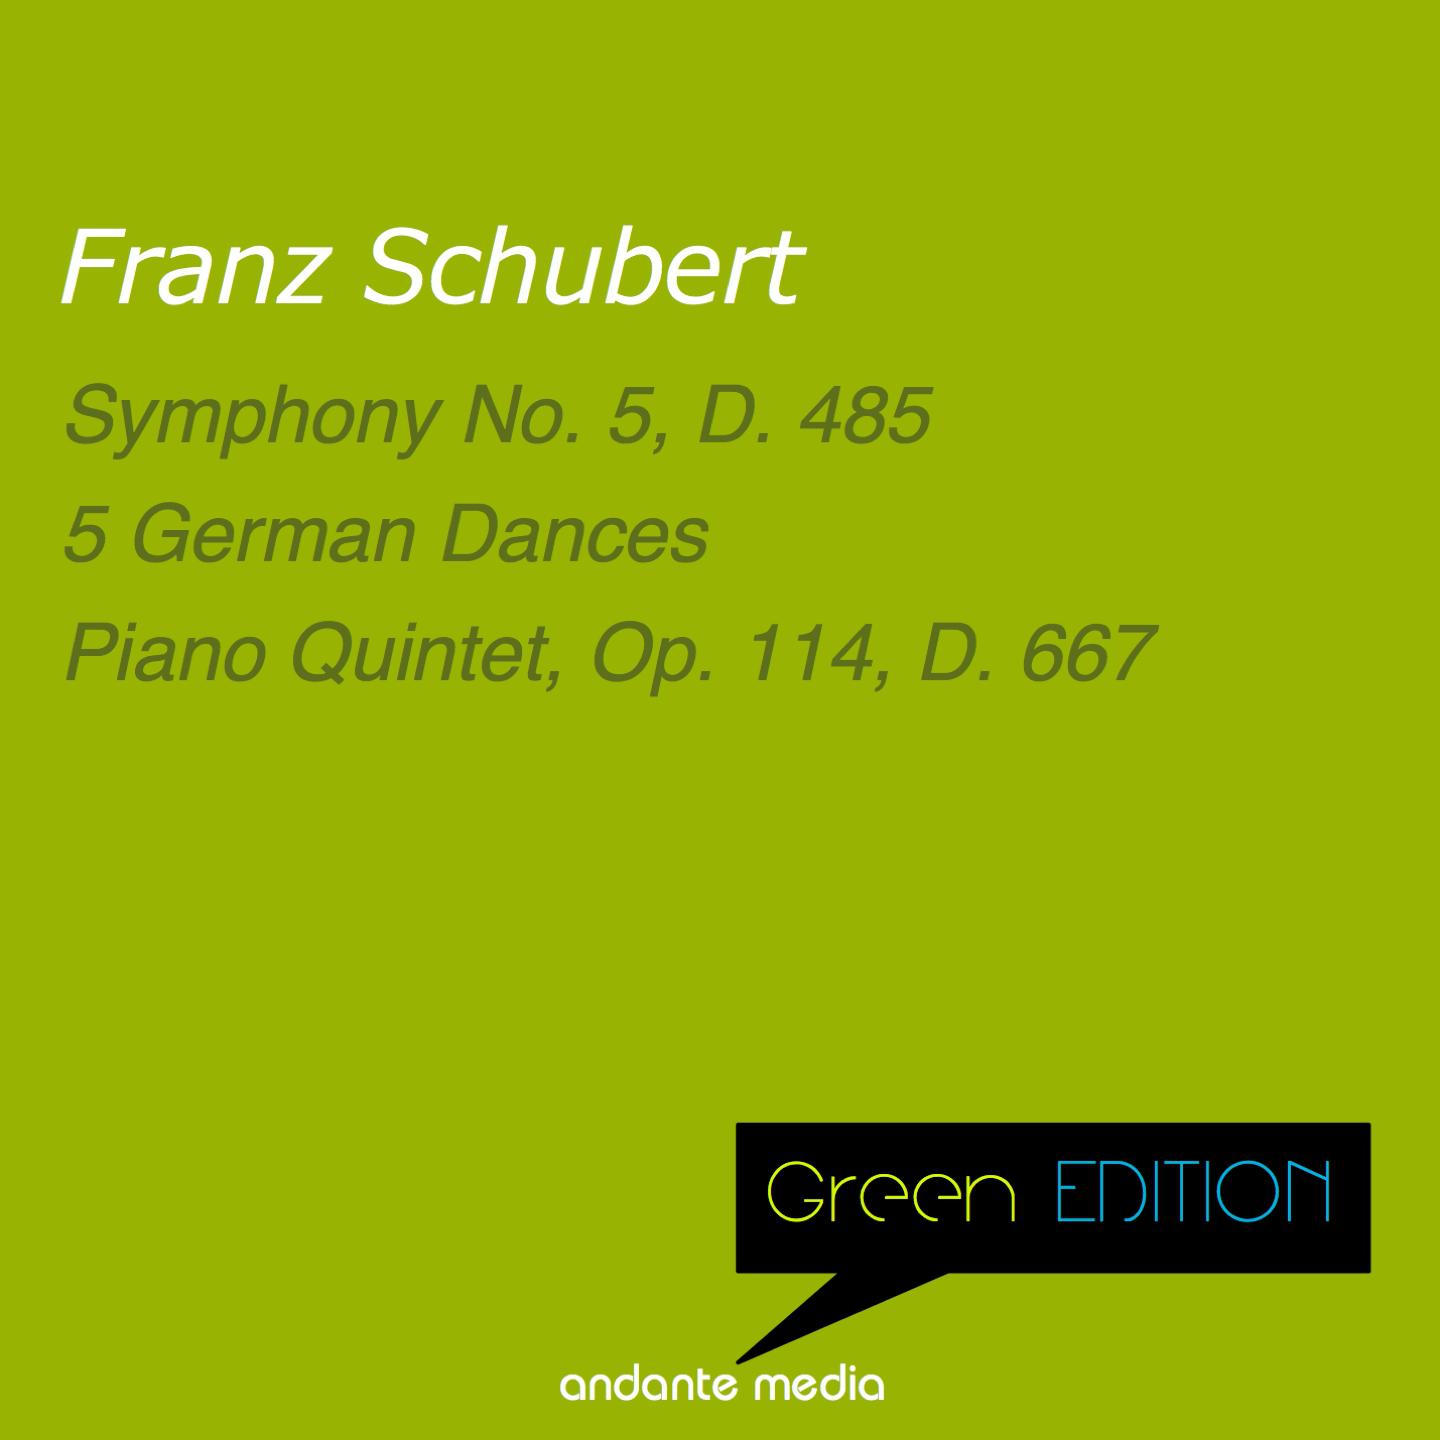 Green Edition - Schubert: Symphony No. 5, D. 485 & Piano Quintet, Op. 114, D. 667